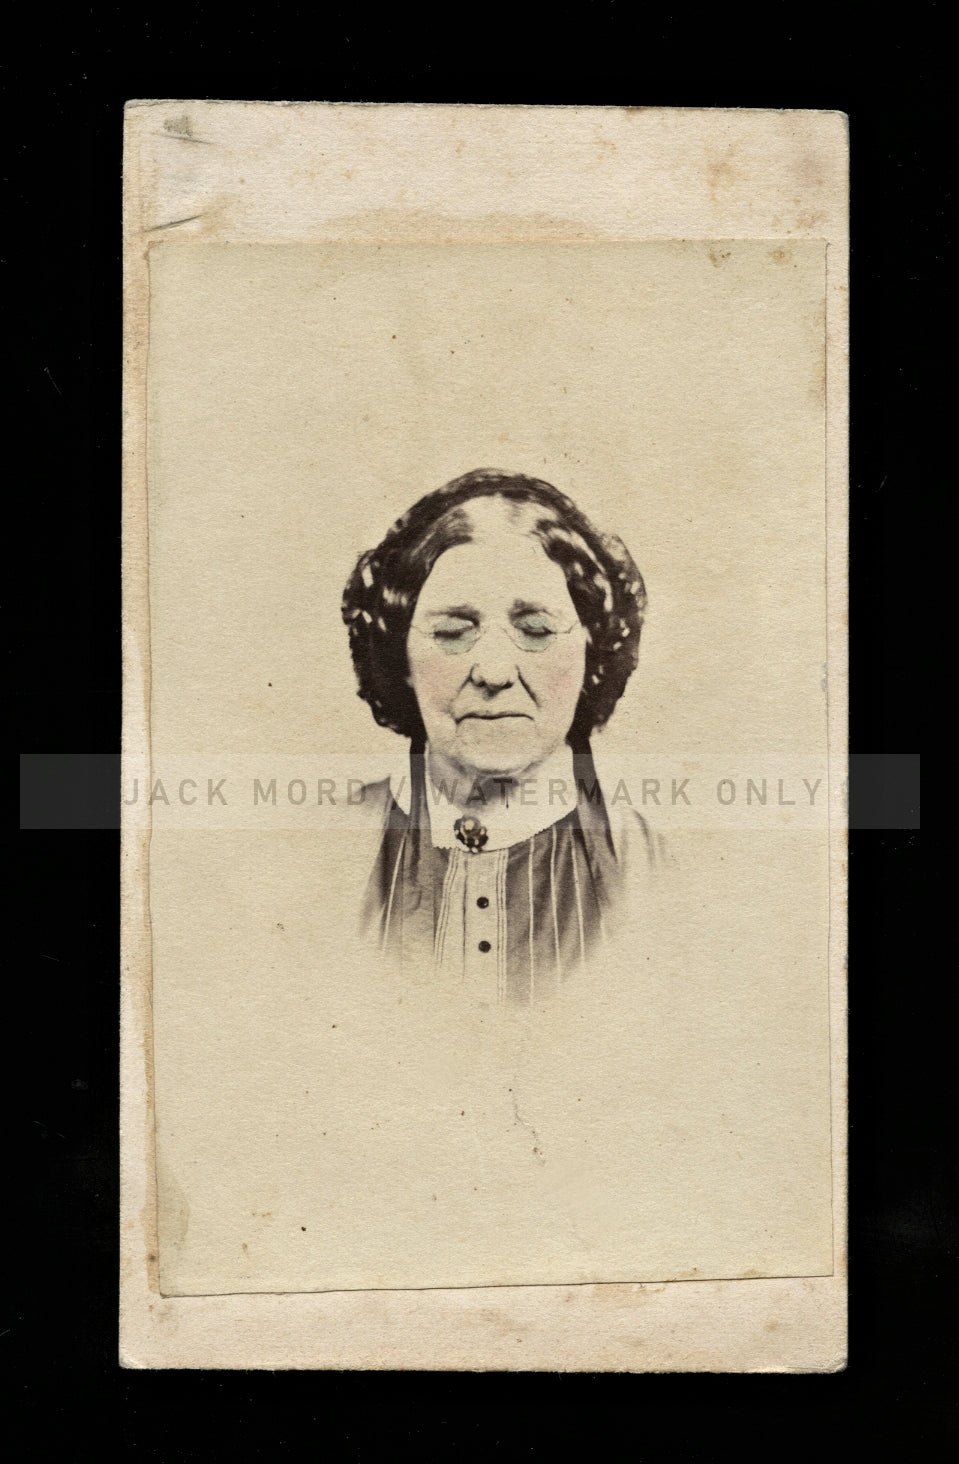 Unique 1860s CDV Photo - Possible Post Mortem Woman - Tinted Eyeglasses!